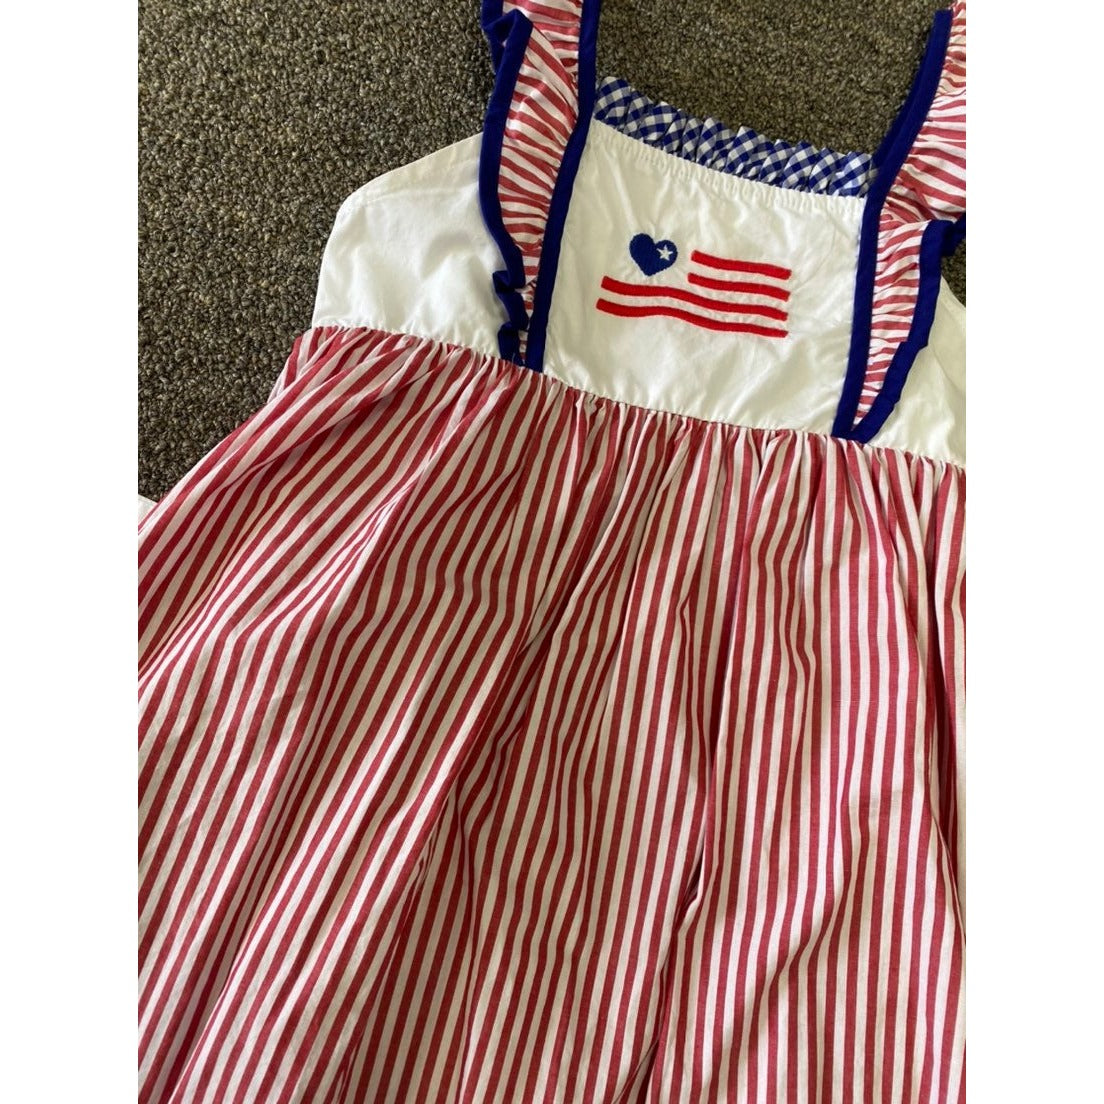 Size 6 patriotic flag Dress